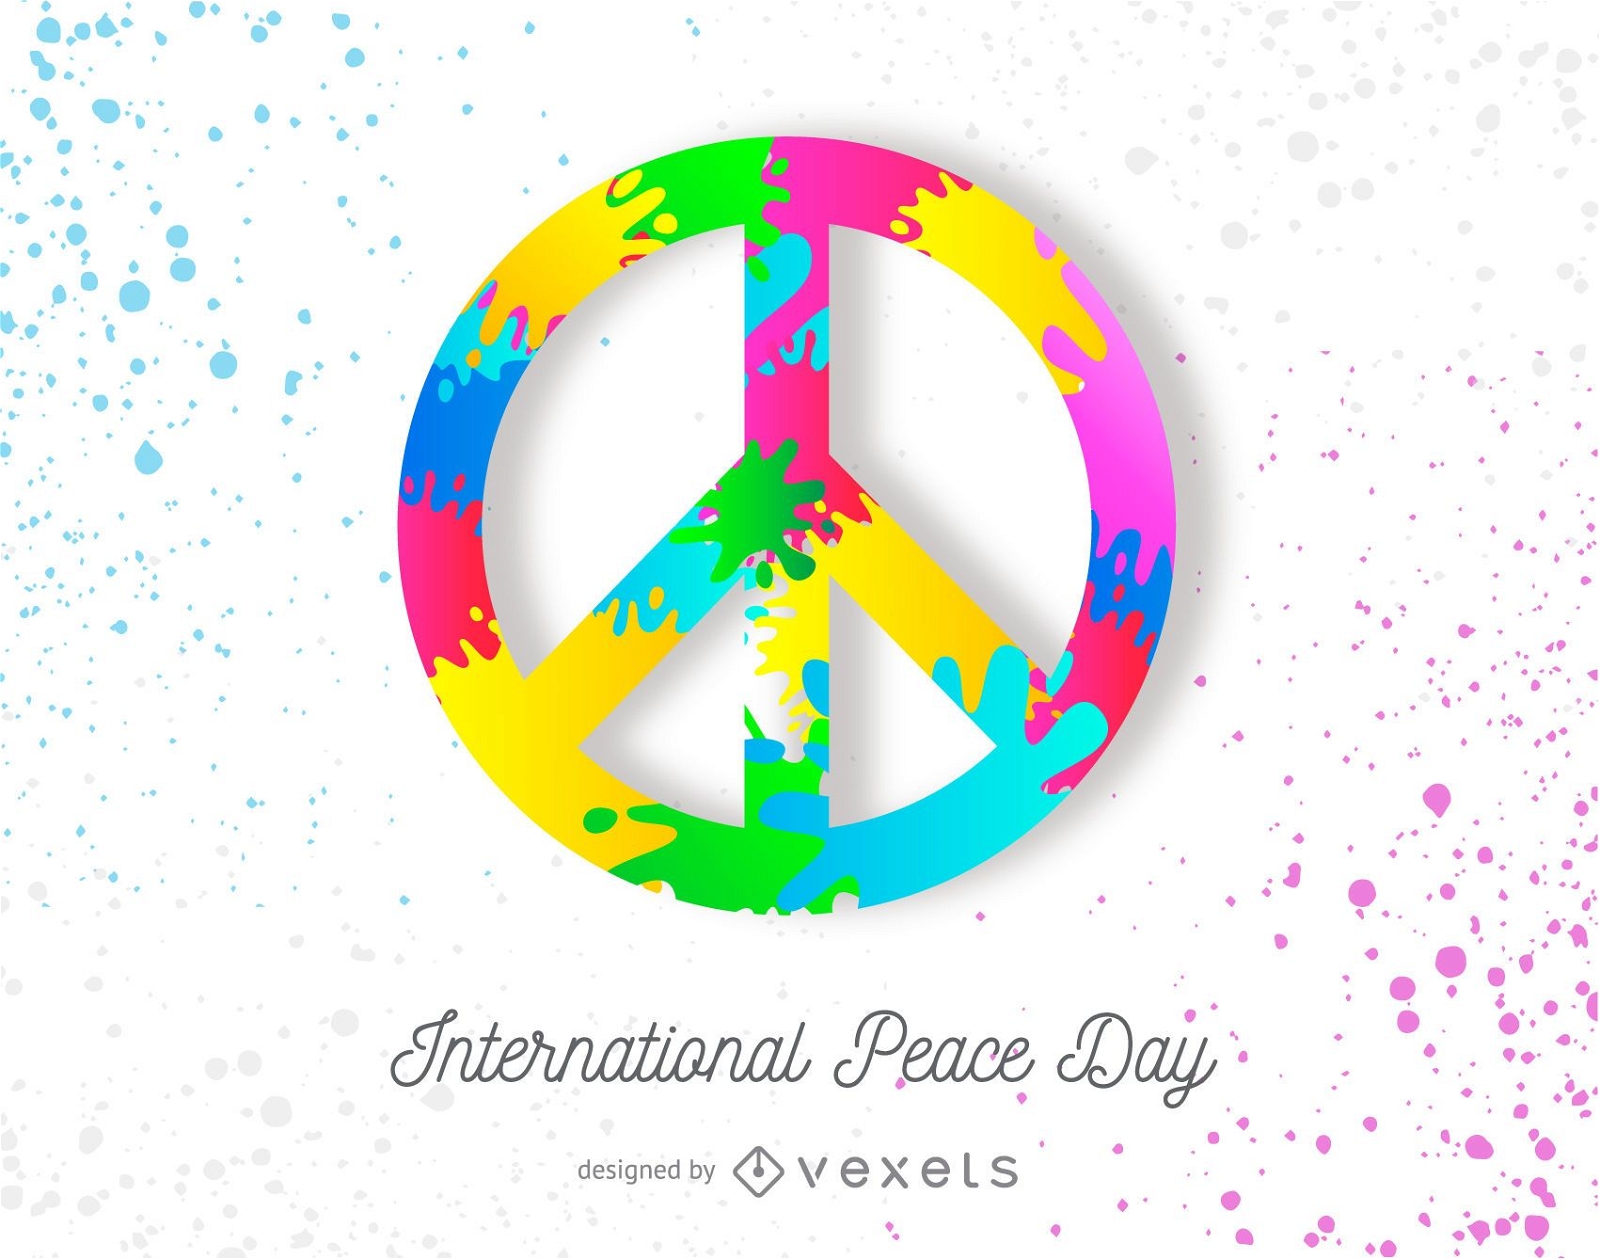 Colorful Peace Day design